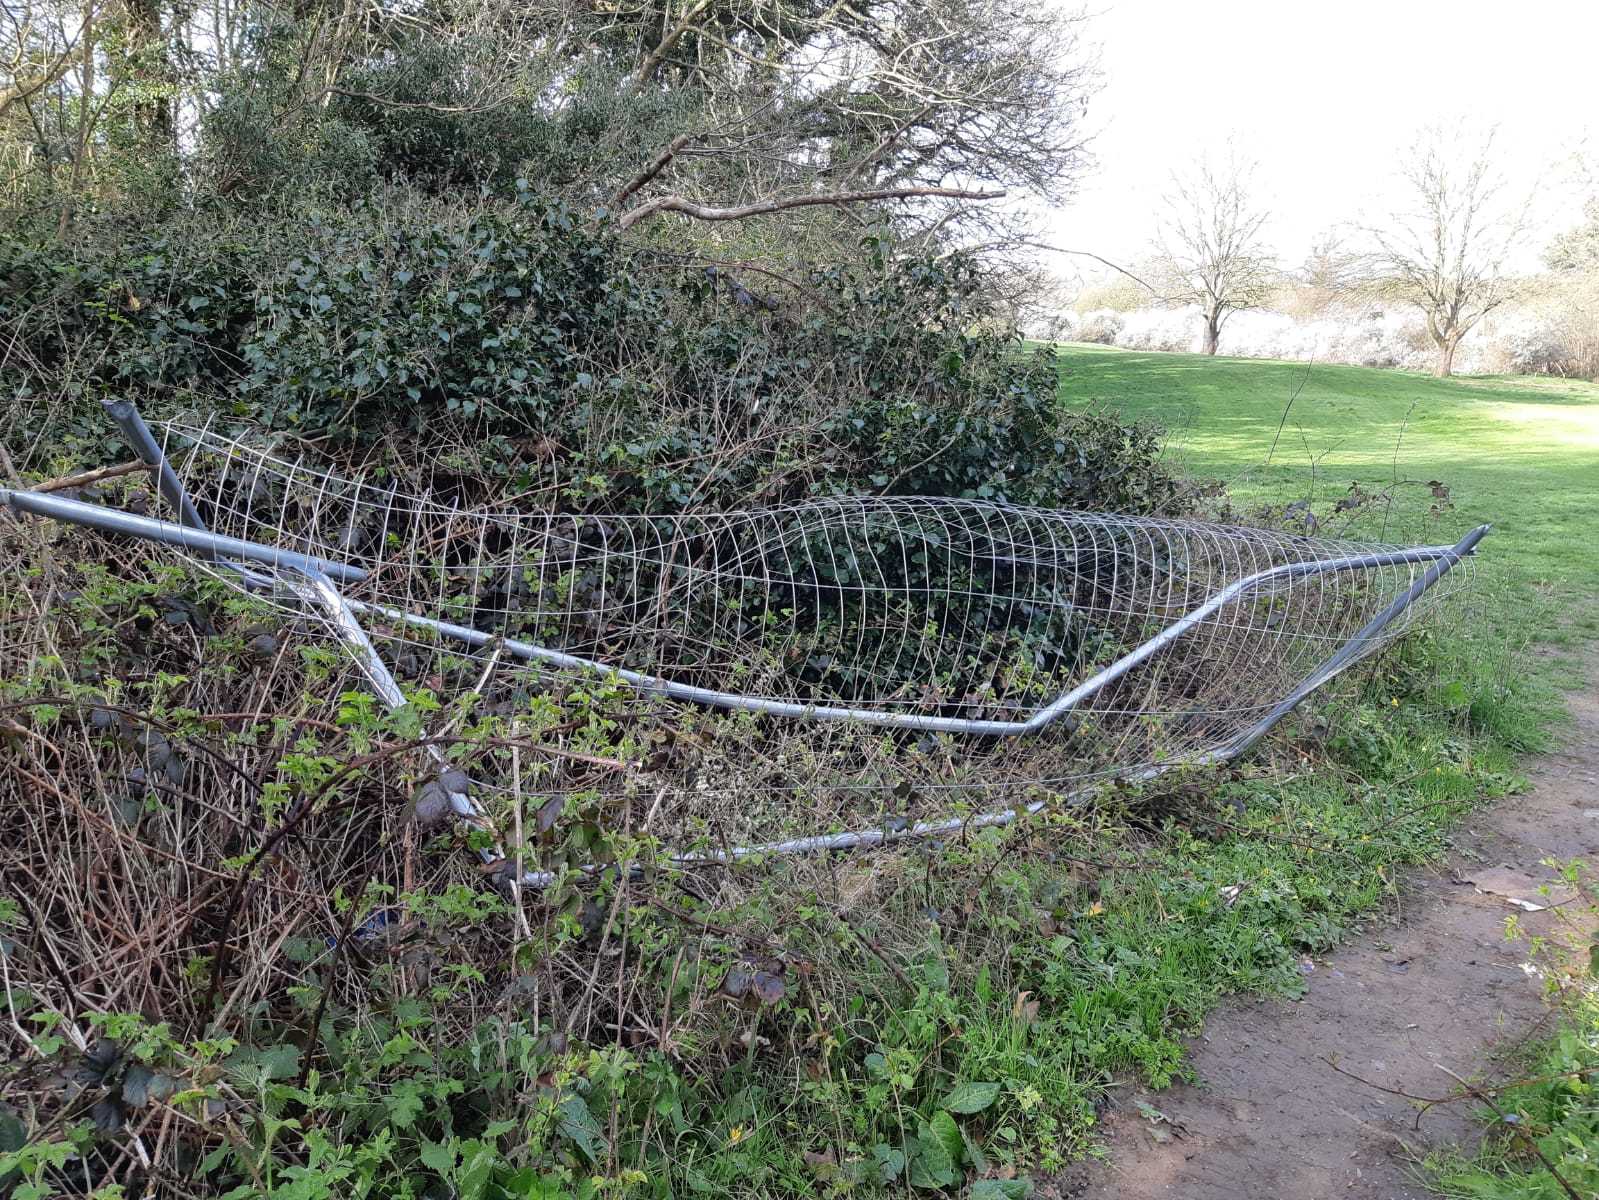 More damaged fencing at Bushey Hall Golf Club. Credit: Hertfordshire Constabulary